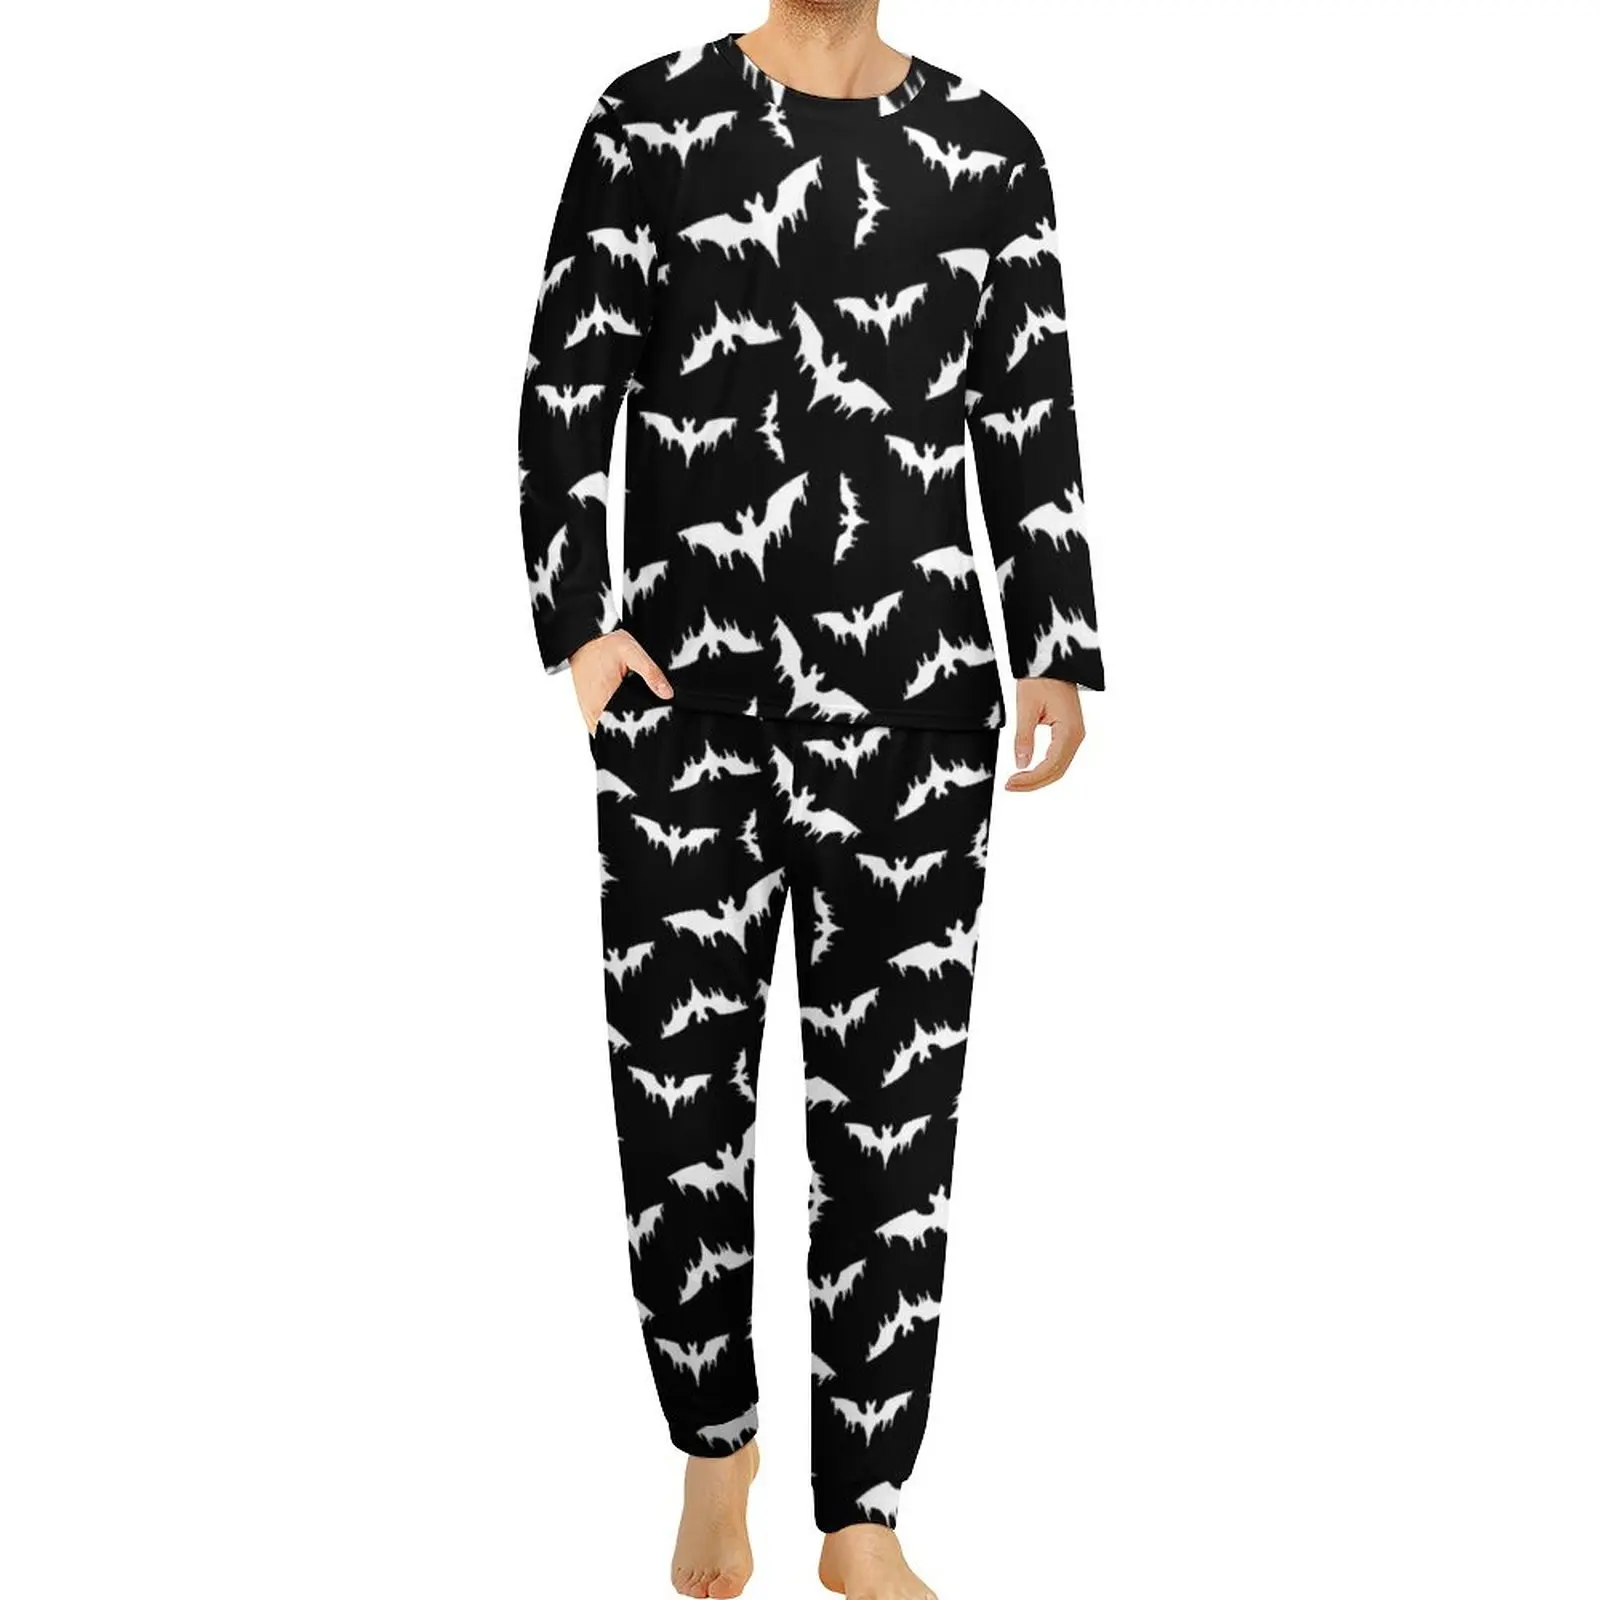 White Bats Print Pajamas Funny Animal Mens Long Sleeves Fashion Pajama Sets 2 Piece Home Spring Custom Sleepwear Gift